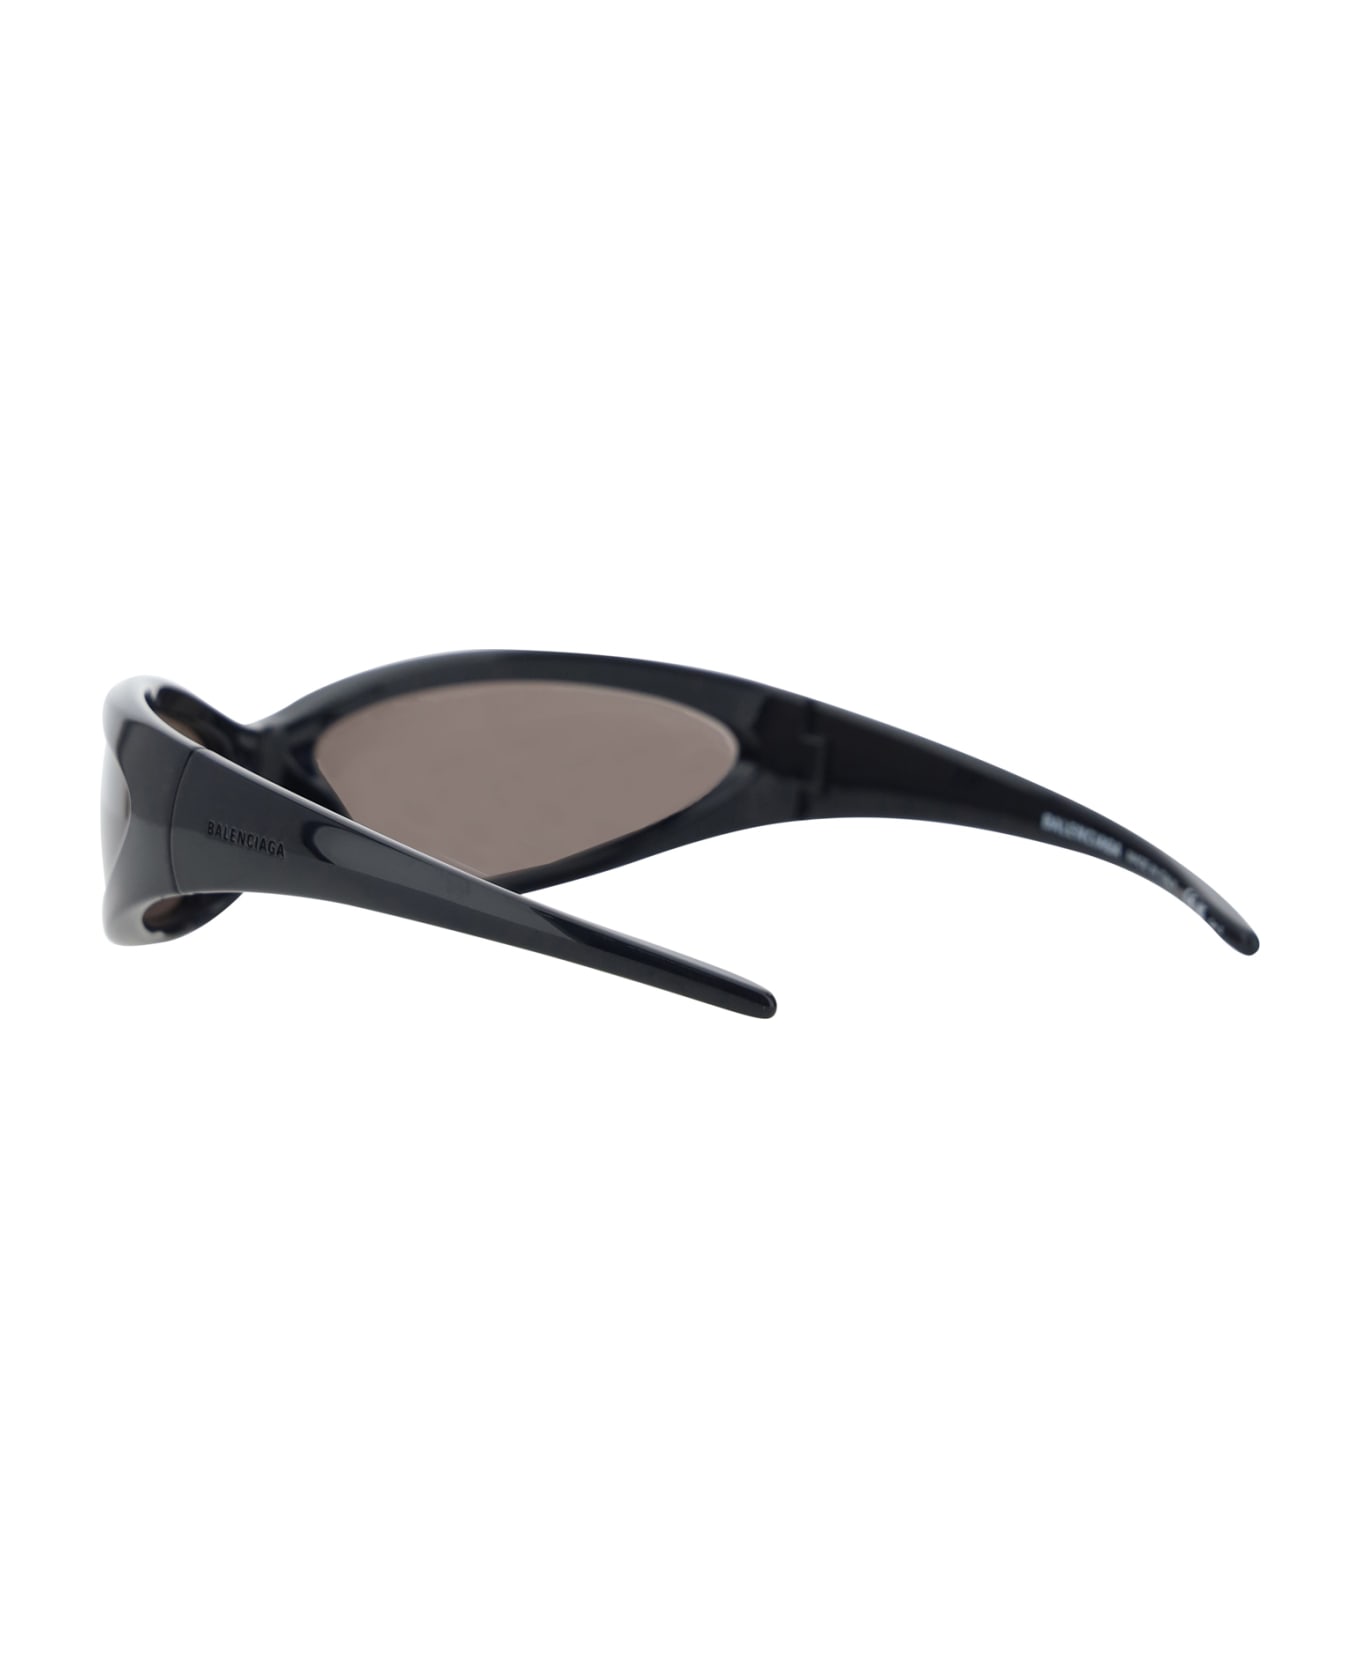 Balenciaga Skin Cat Sunglasses - Black